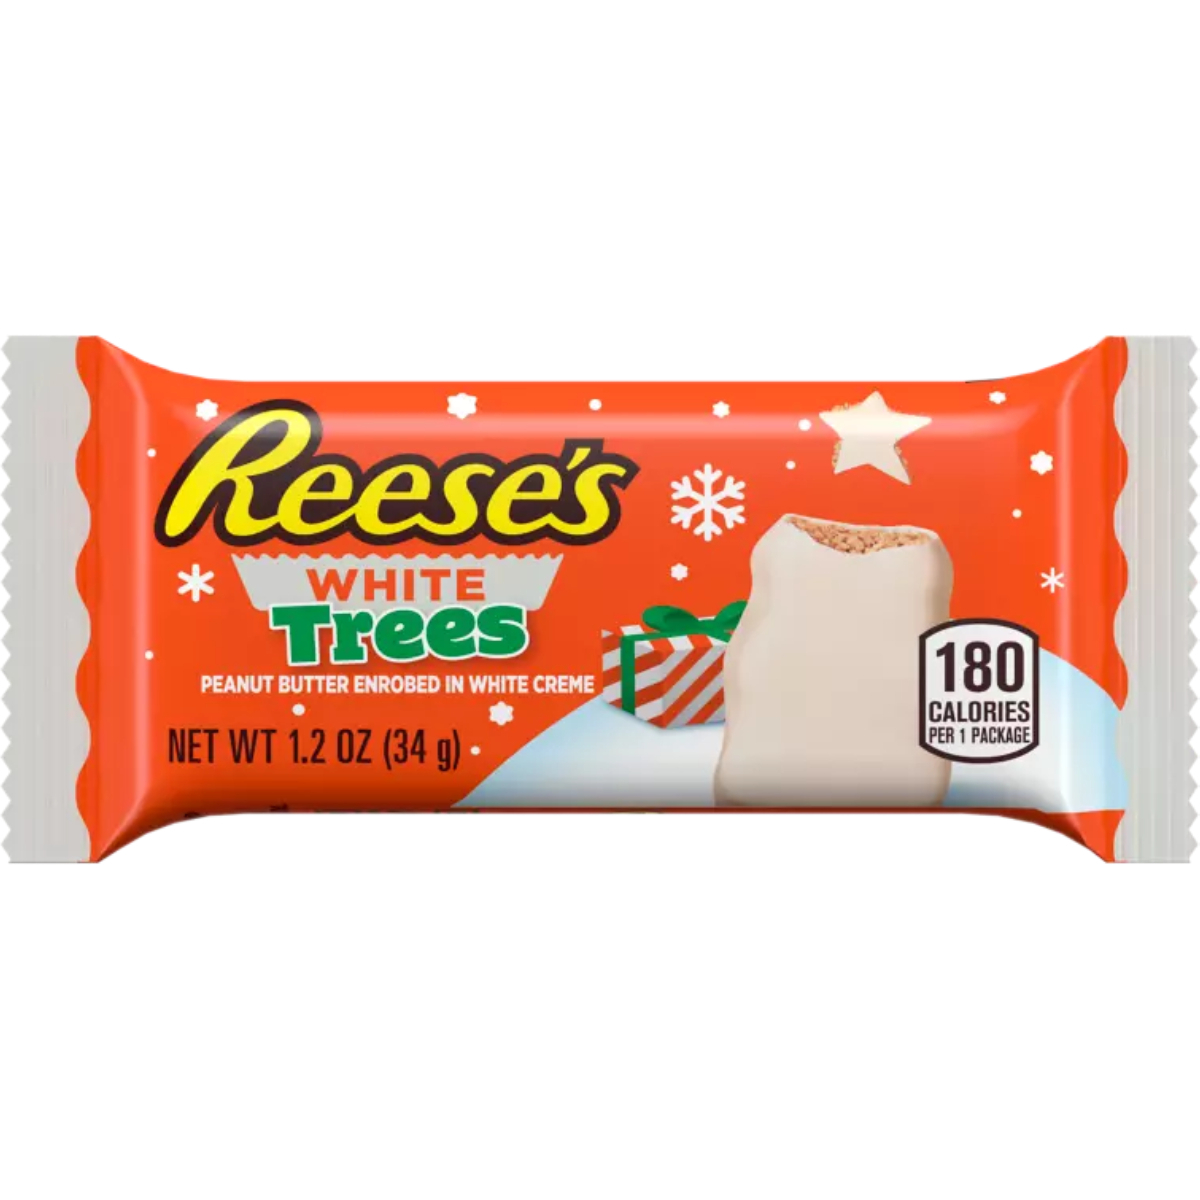 Reese's Trees White Peanut Butter 34 g